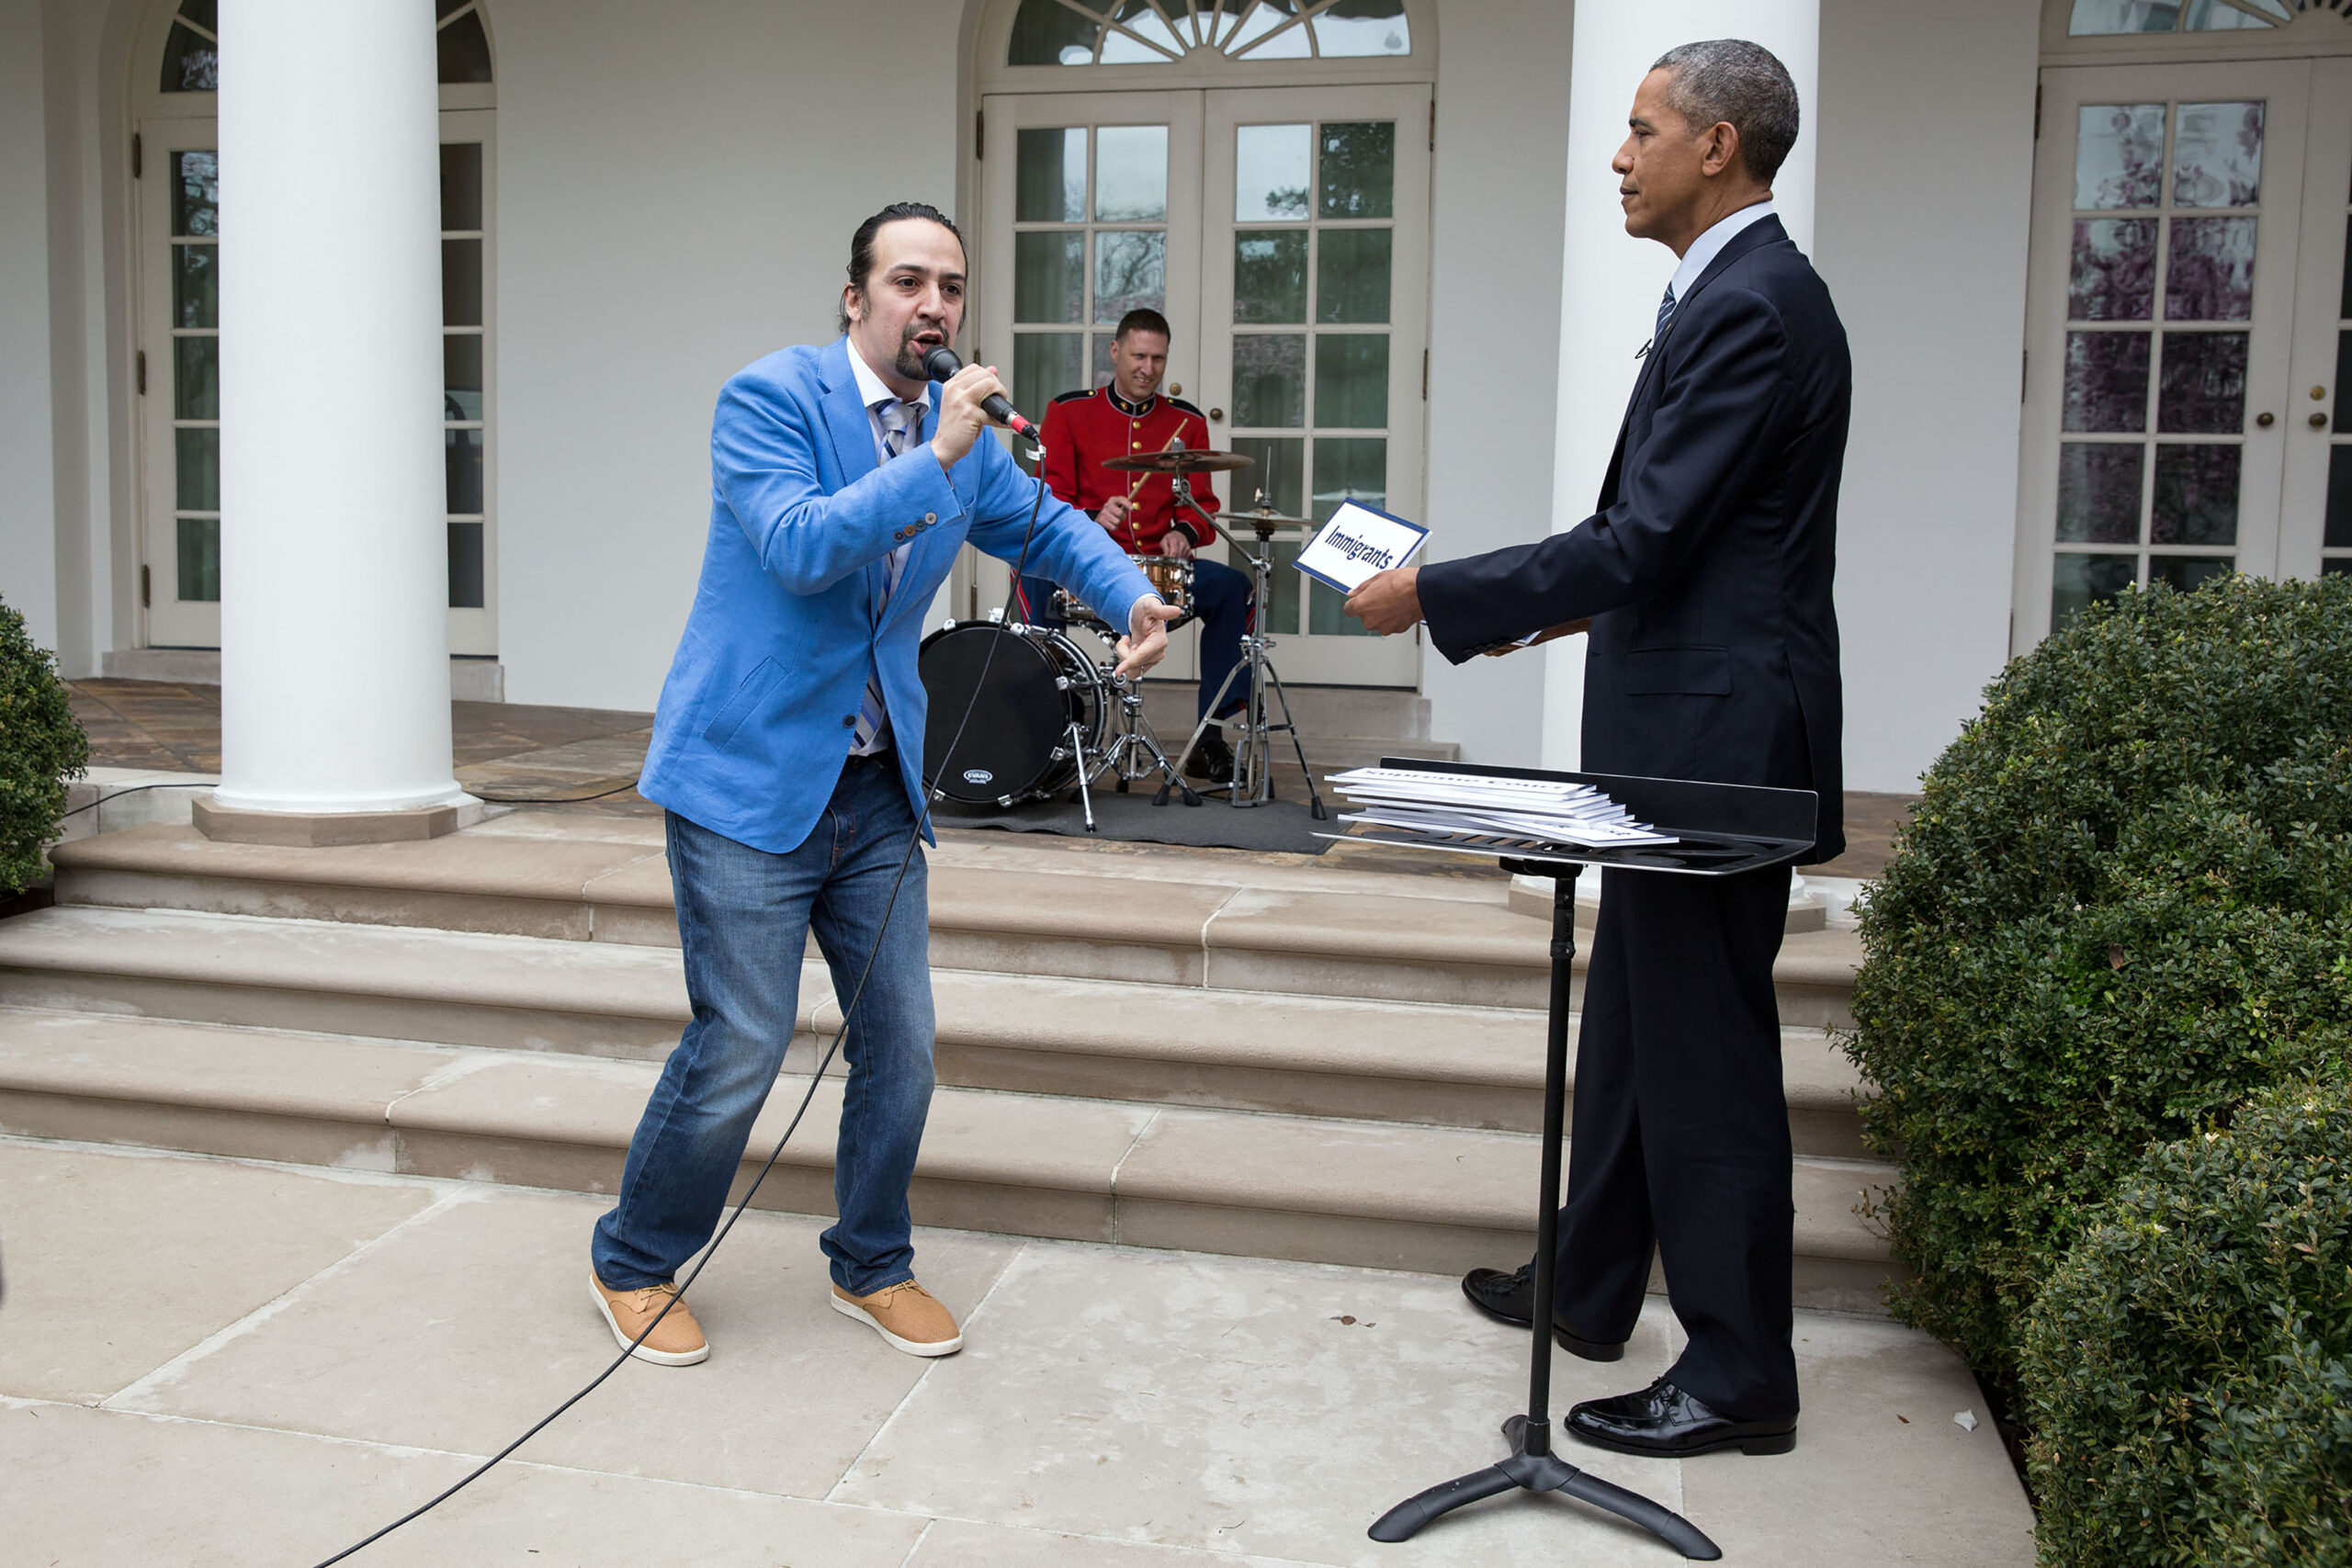  Performing Hamilton at the White House